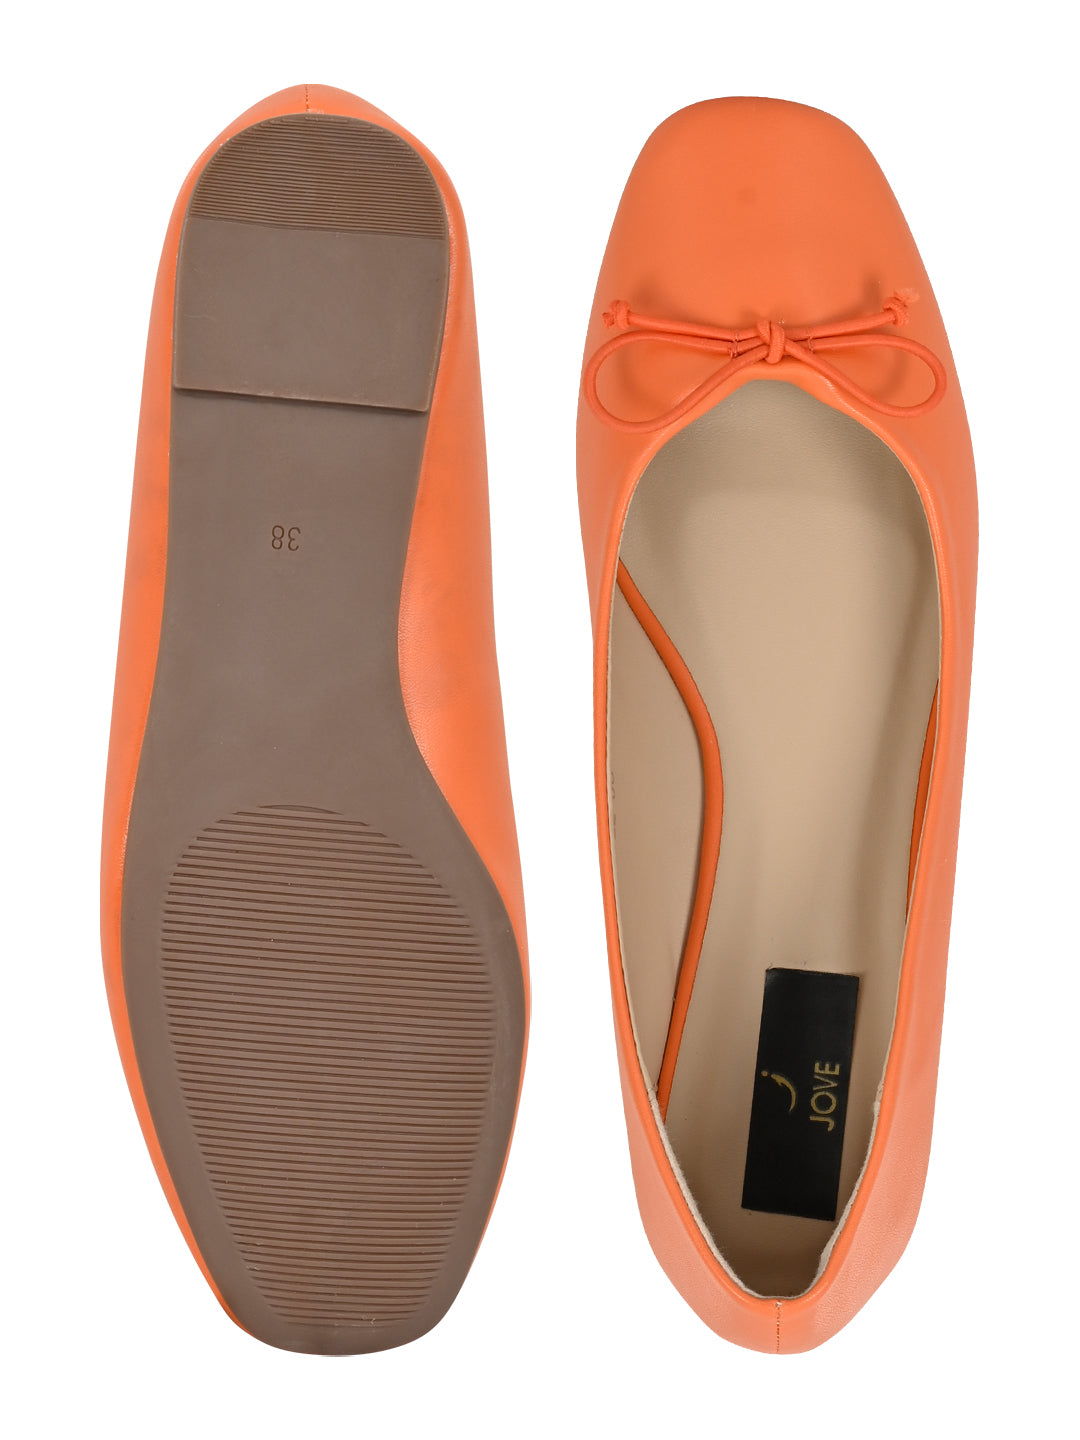 Footwear, Women Footwear, Orange Ballerinas